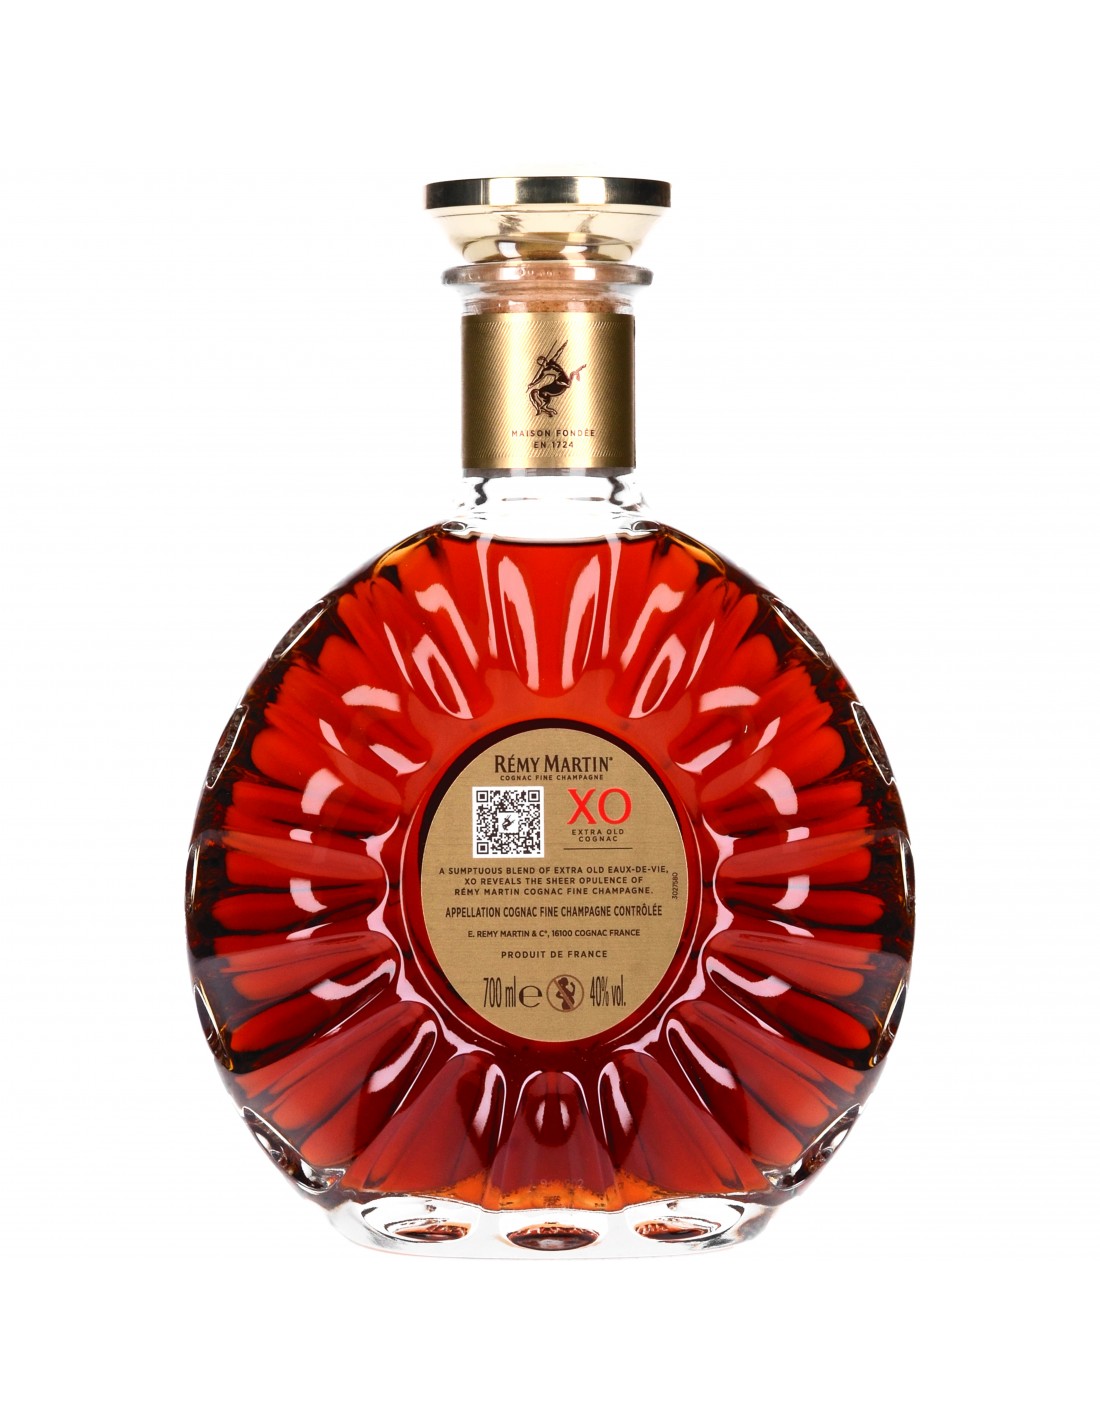 Brandy Cognac Rémy Martin XO Excellence Carafe au meilleur prix